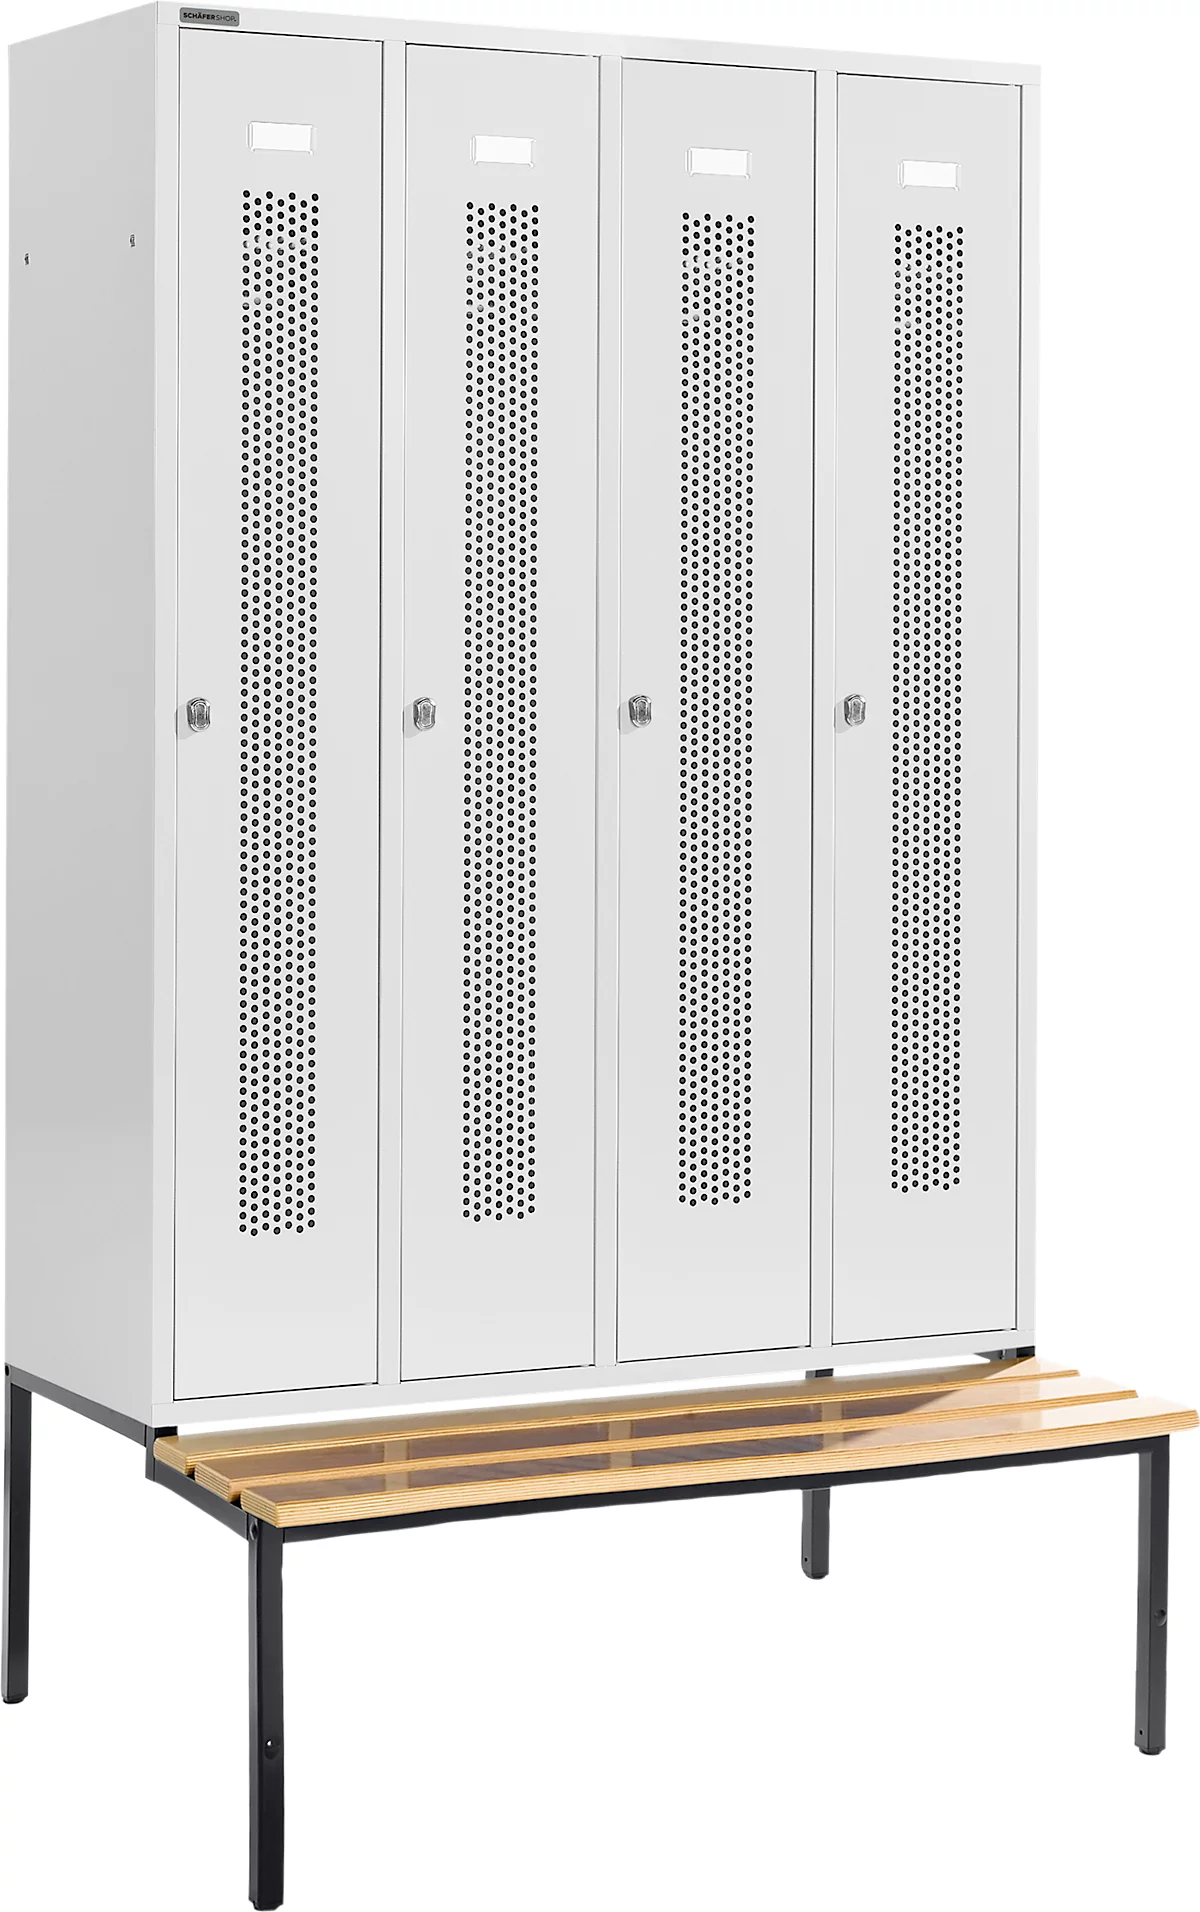 Schäfer Shop Select armario ropero, con banco, 4 compartimentos, 300 mm, cerradura de pestillo giratorio, puerta gris claro